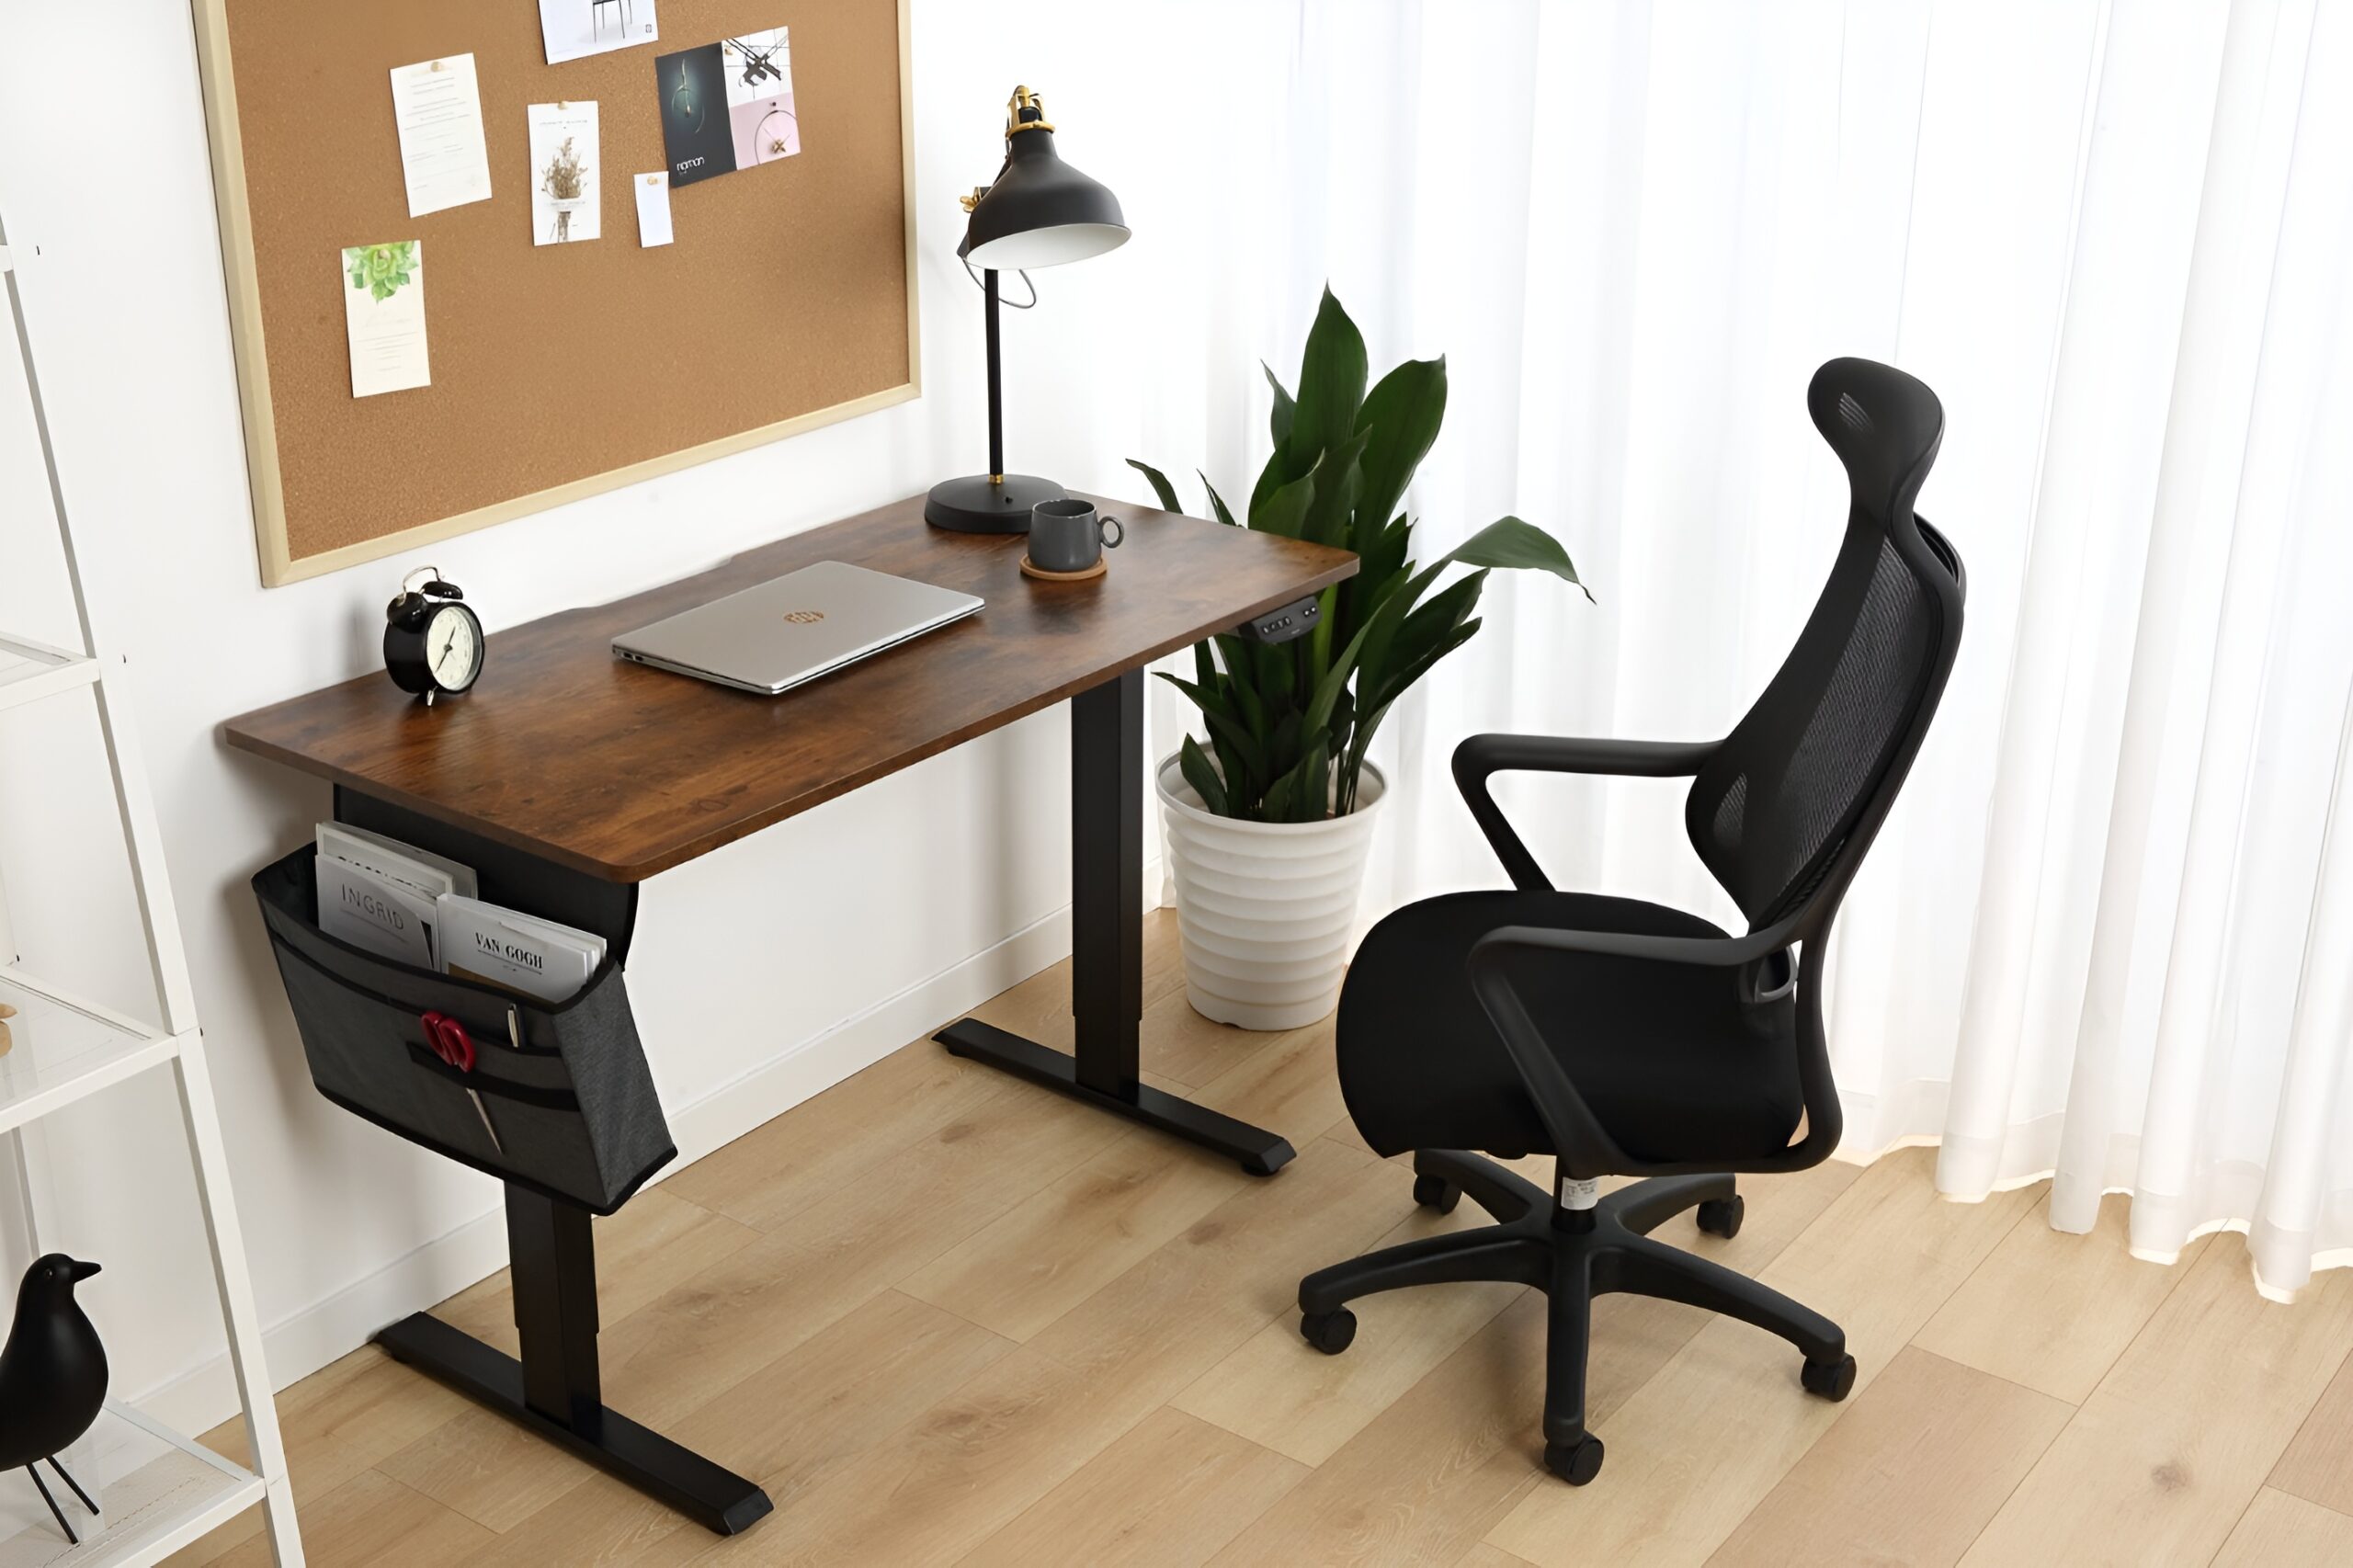 Electric height-adjustable standing desk VFET02